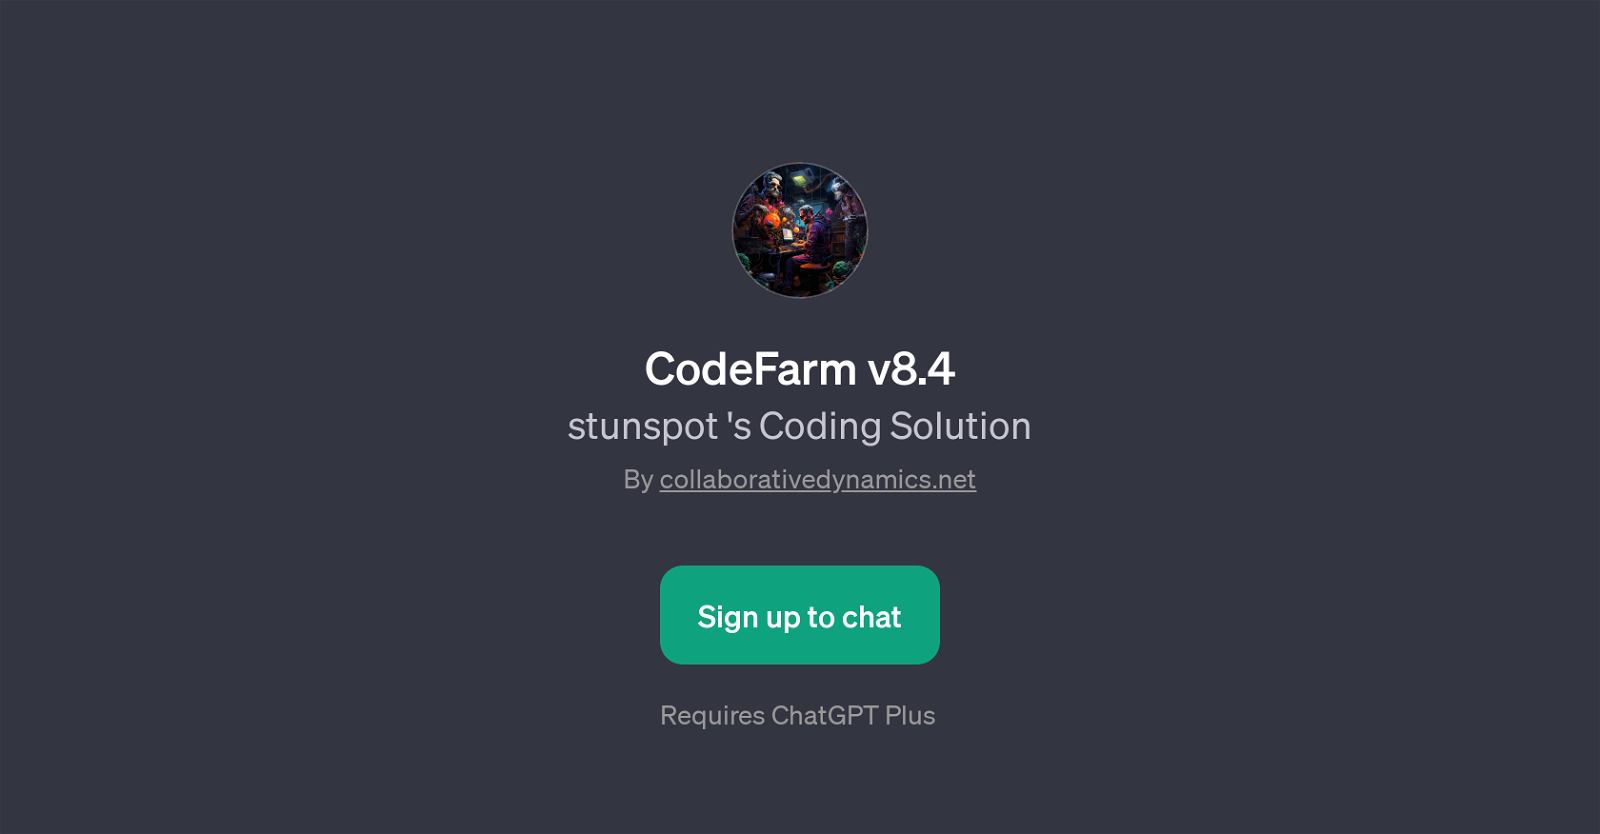 CodeFarm v8.4 website